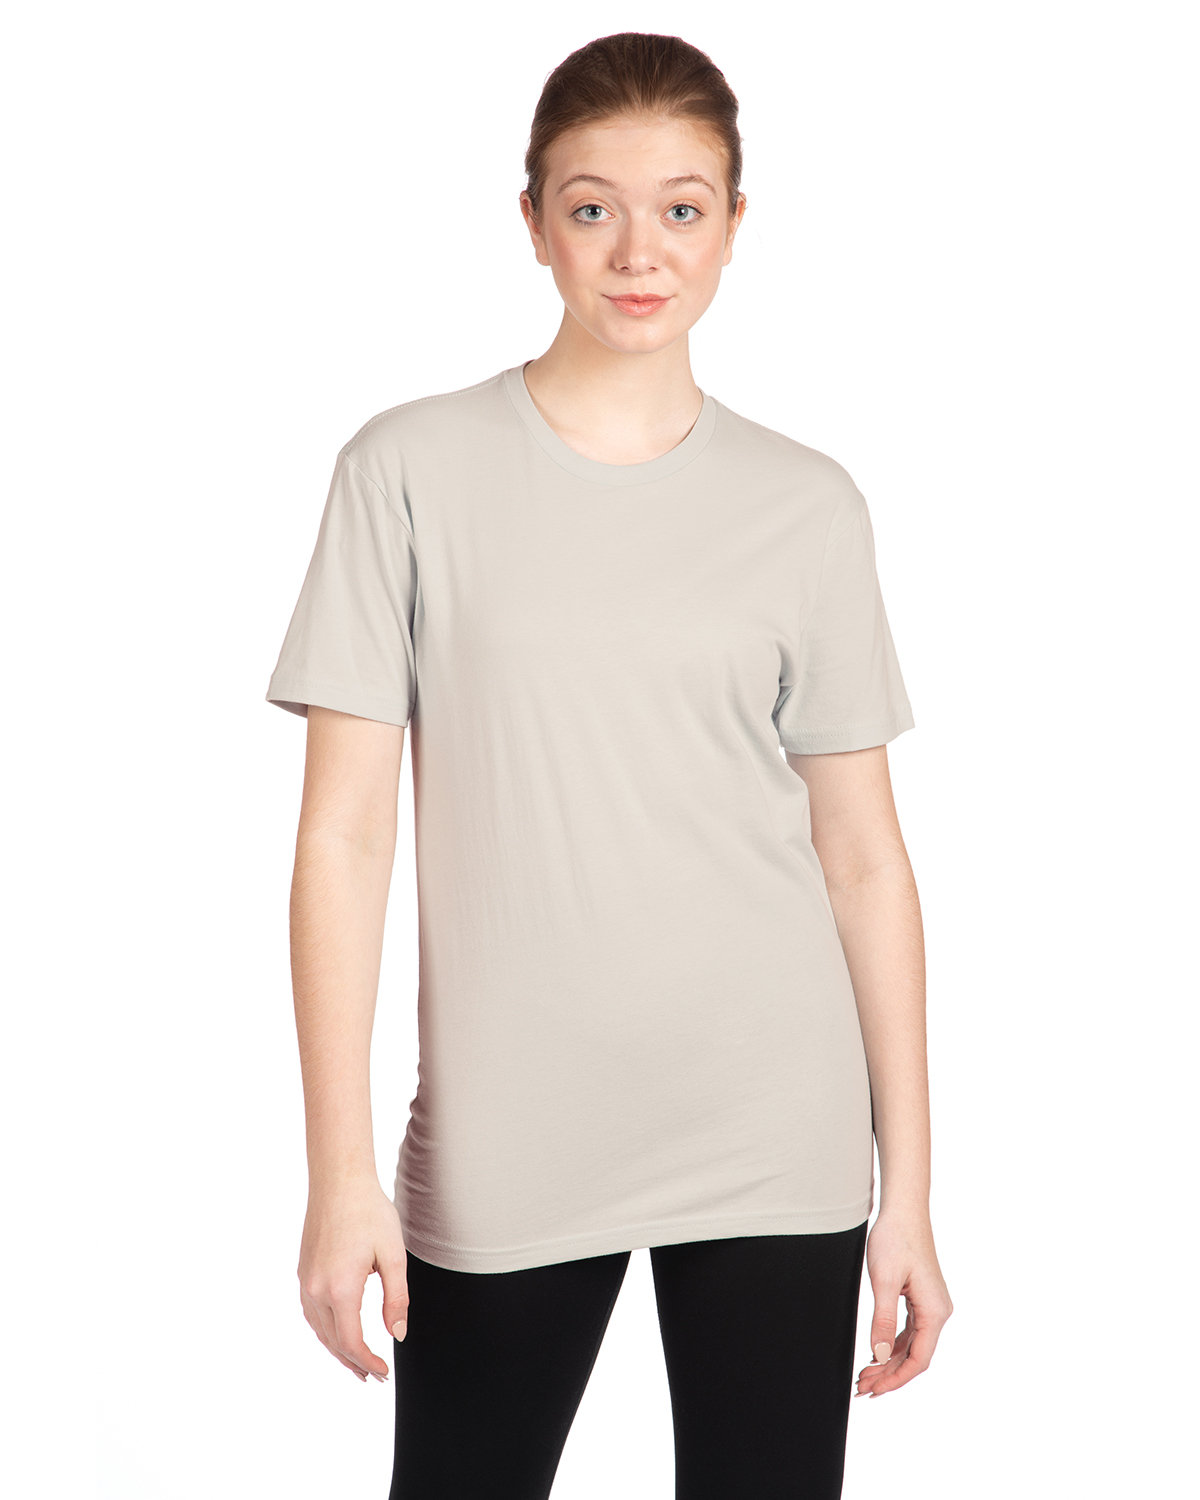 Next Level Apparel Unisex Cotton T-Shirt light gray 